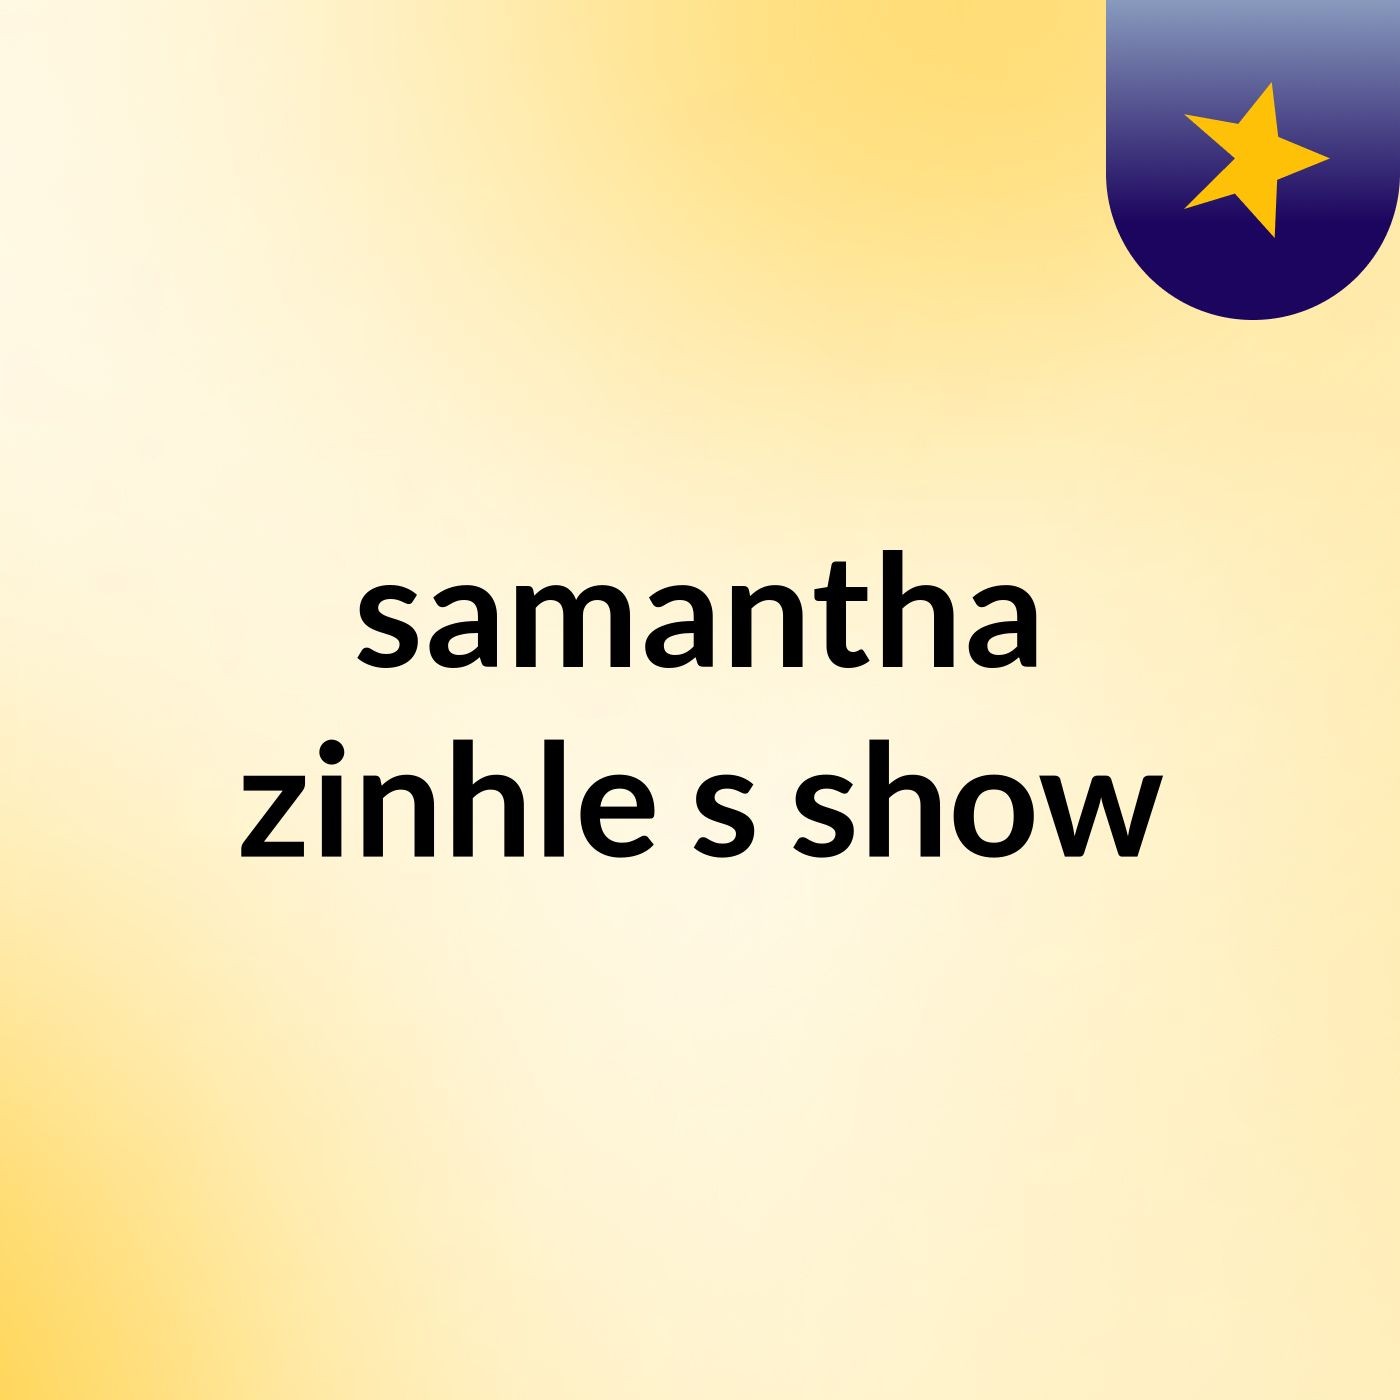 samantha zinhle's show